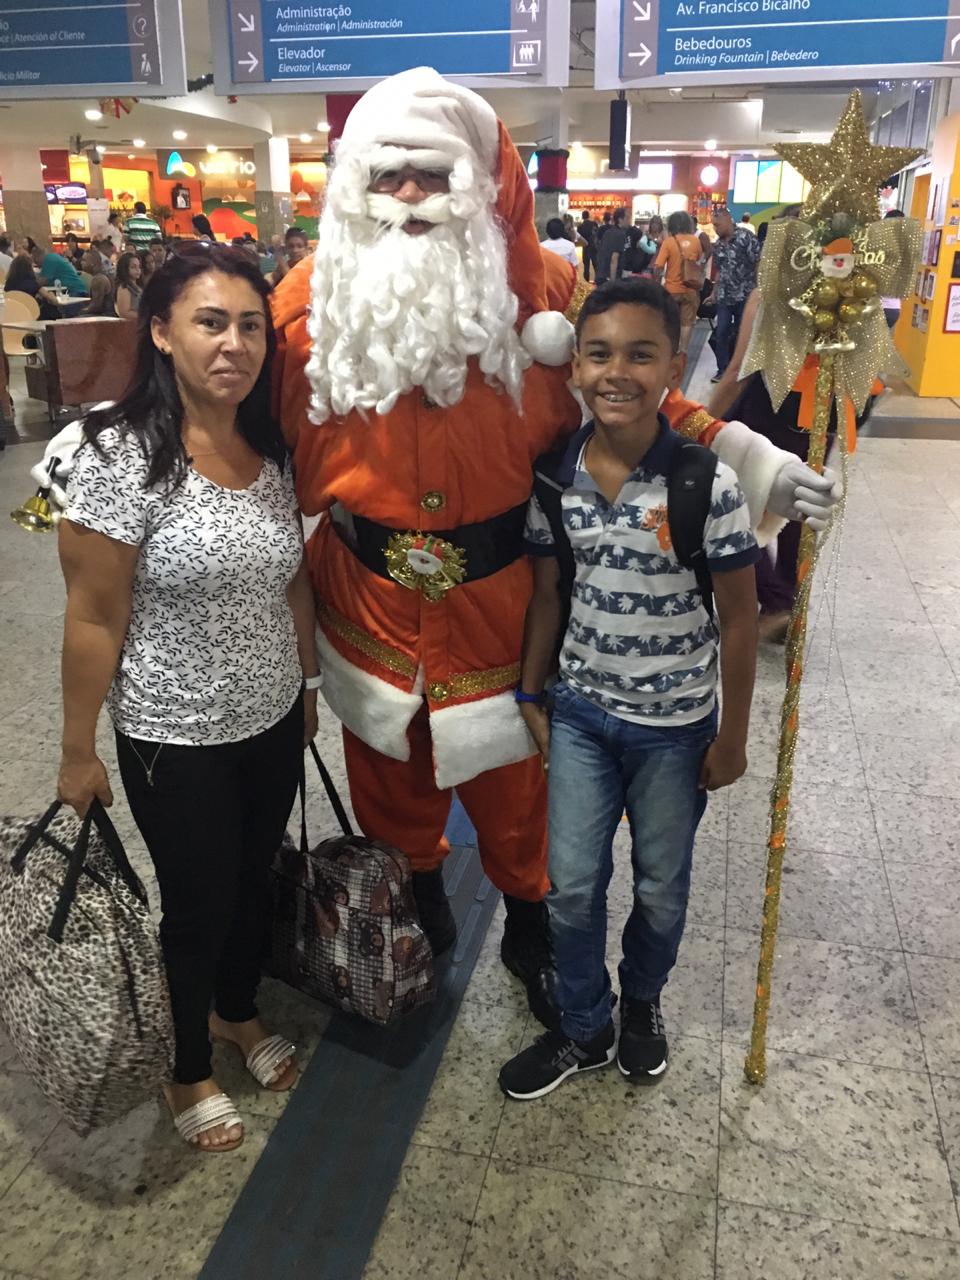 Papai Noel vestido de laranja na campanha #DezembroLaranja na Rodoviária do Rio